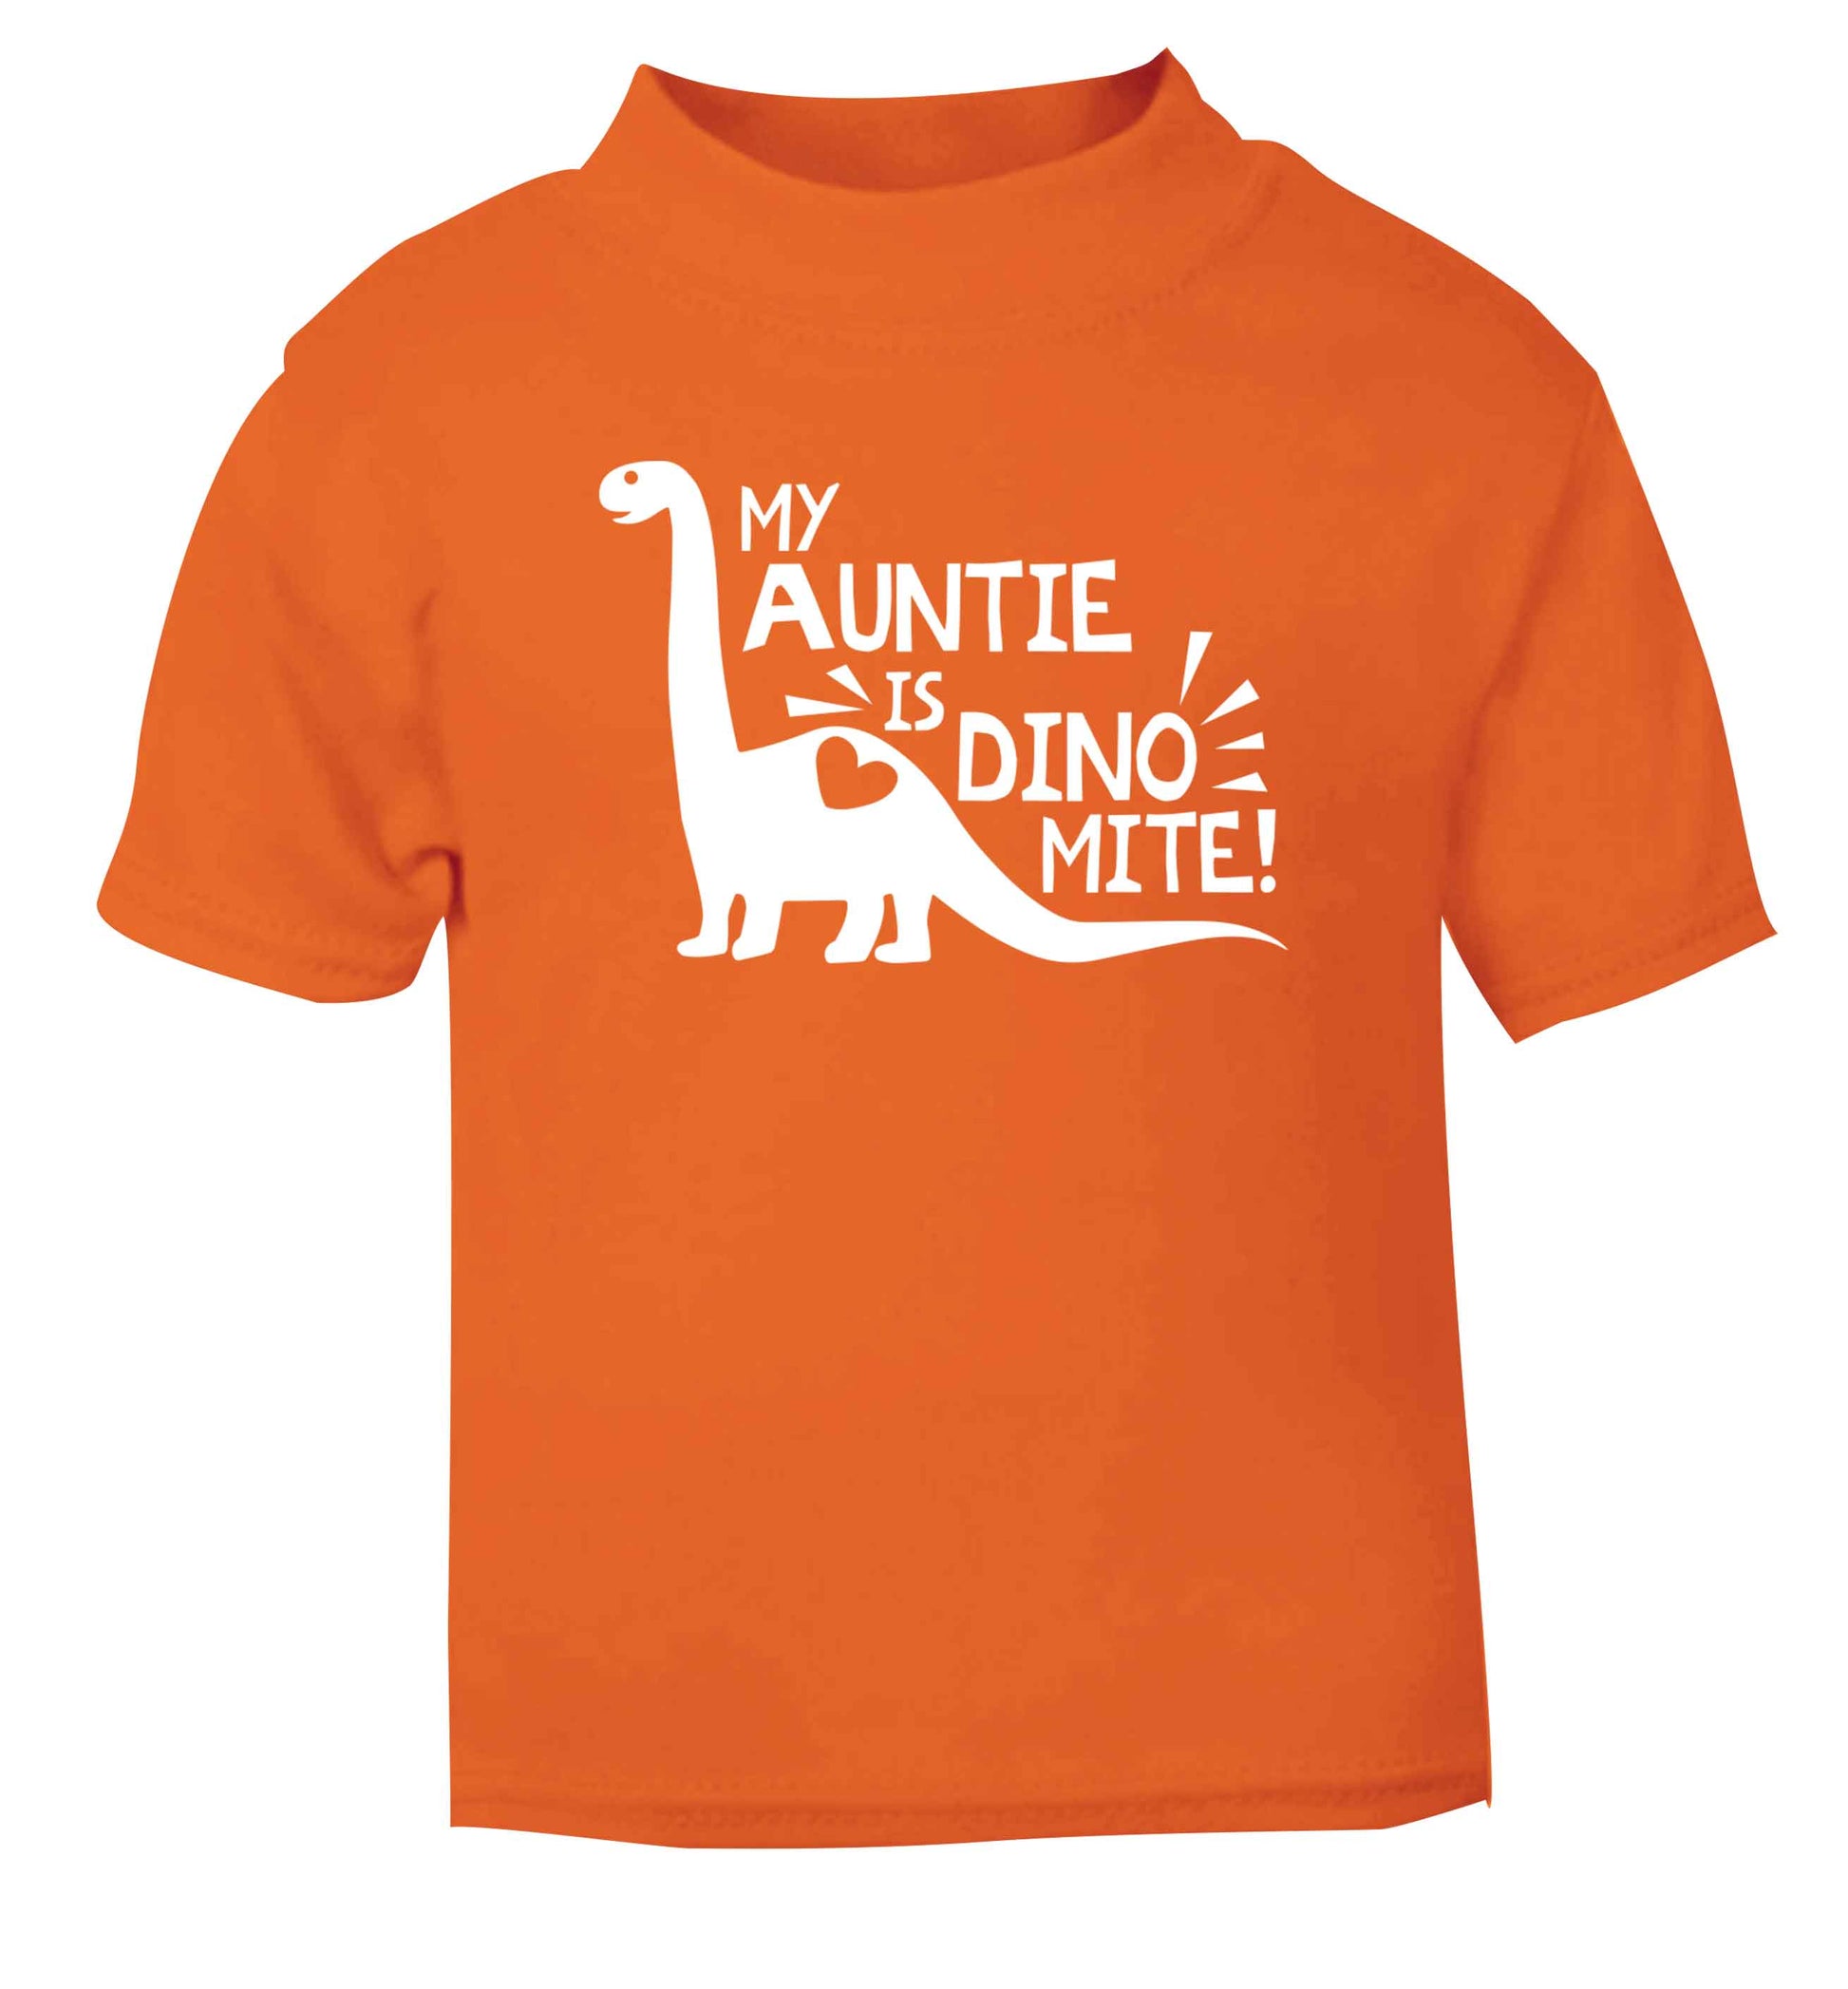 My auntie is dinomite! orange Baby Toddler Tshirt 2 Years